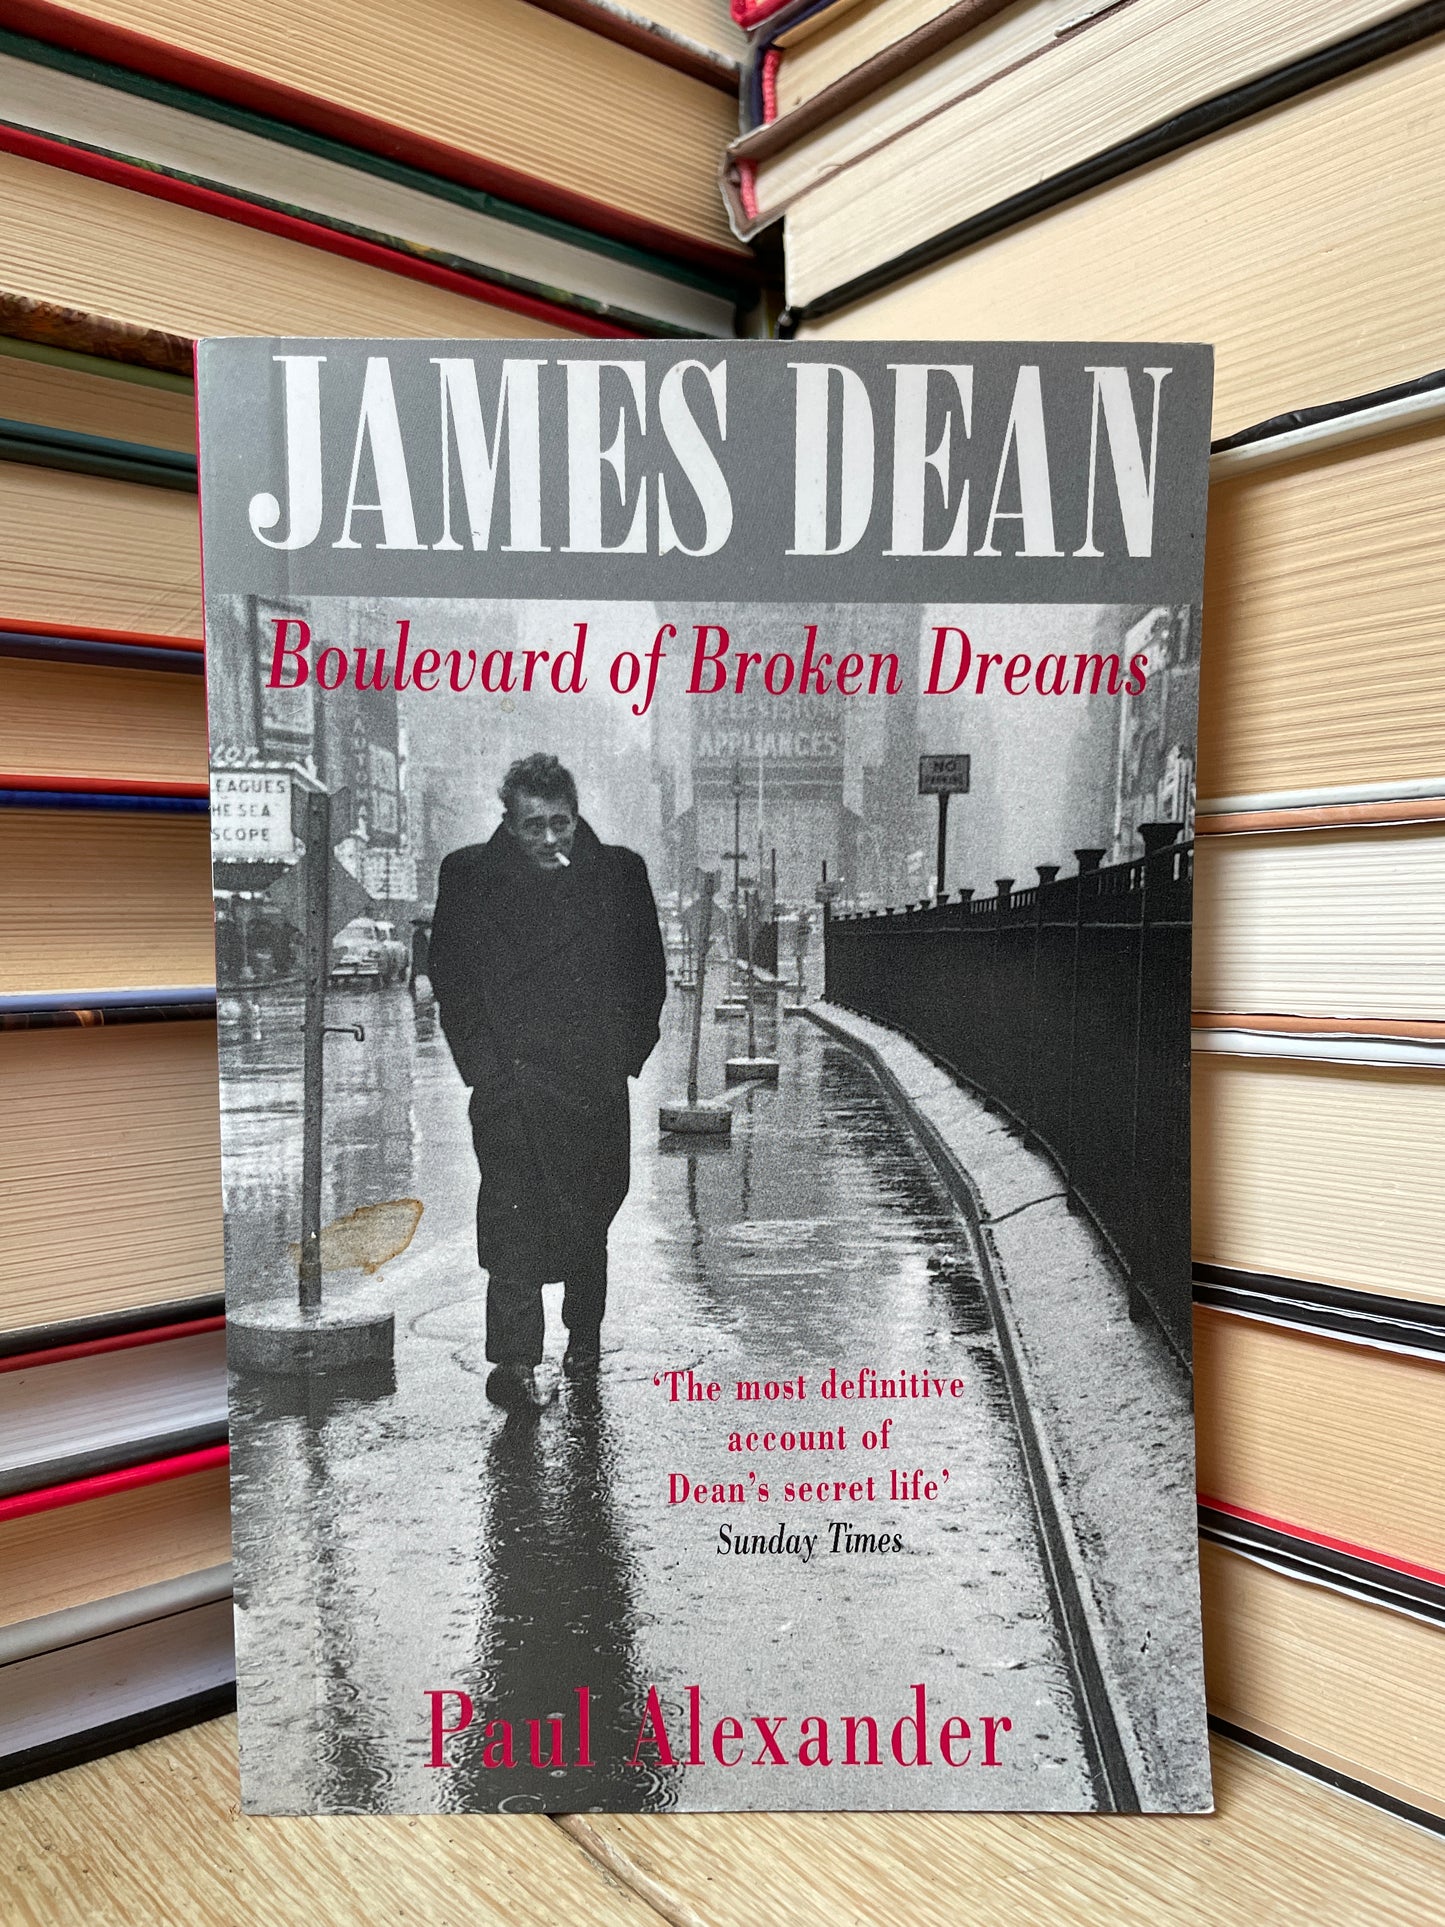 Paul Alexander - James Dean: Boulevard of Broken Dreams